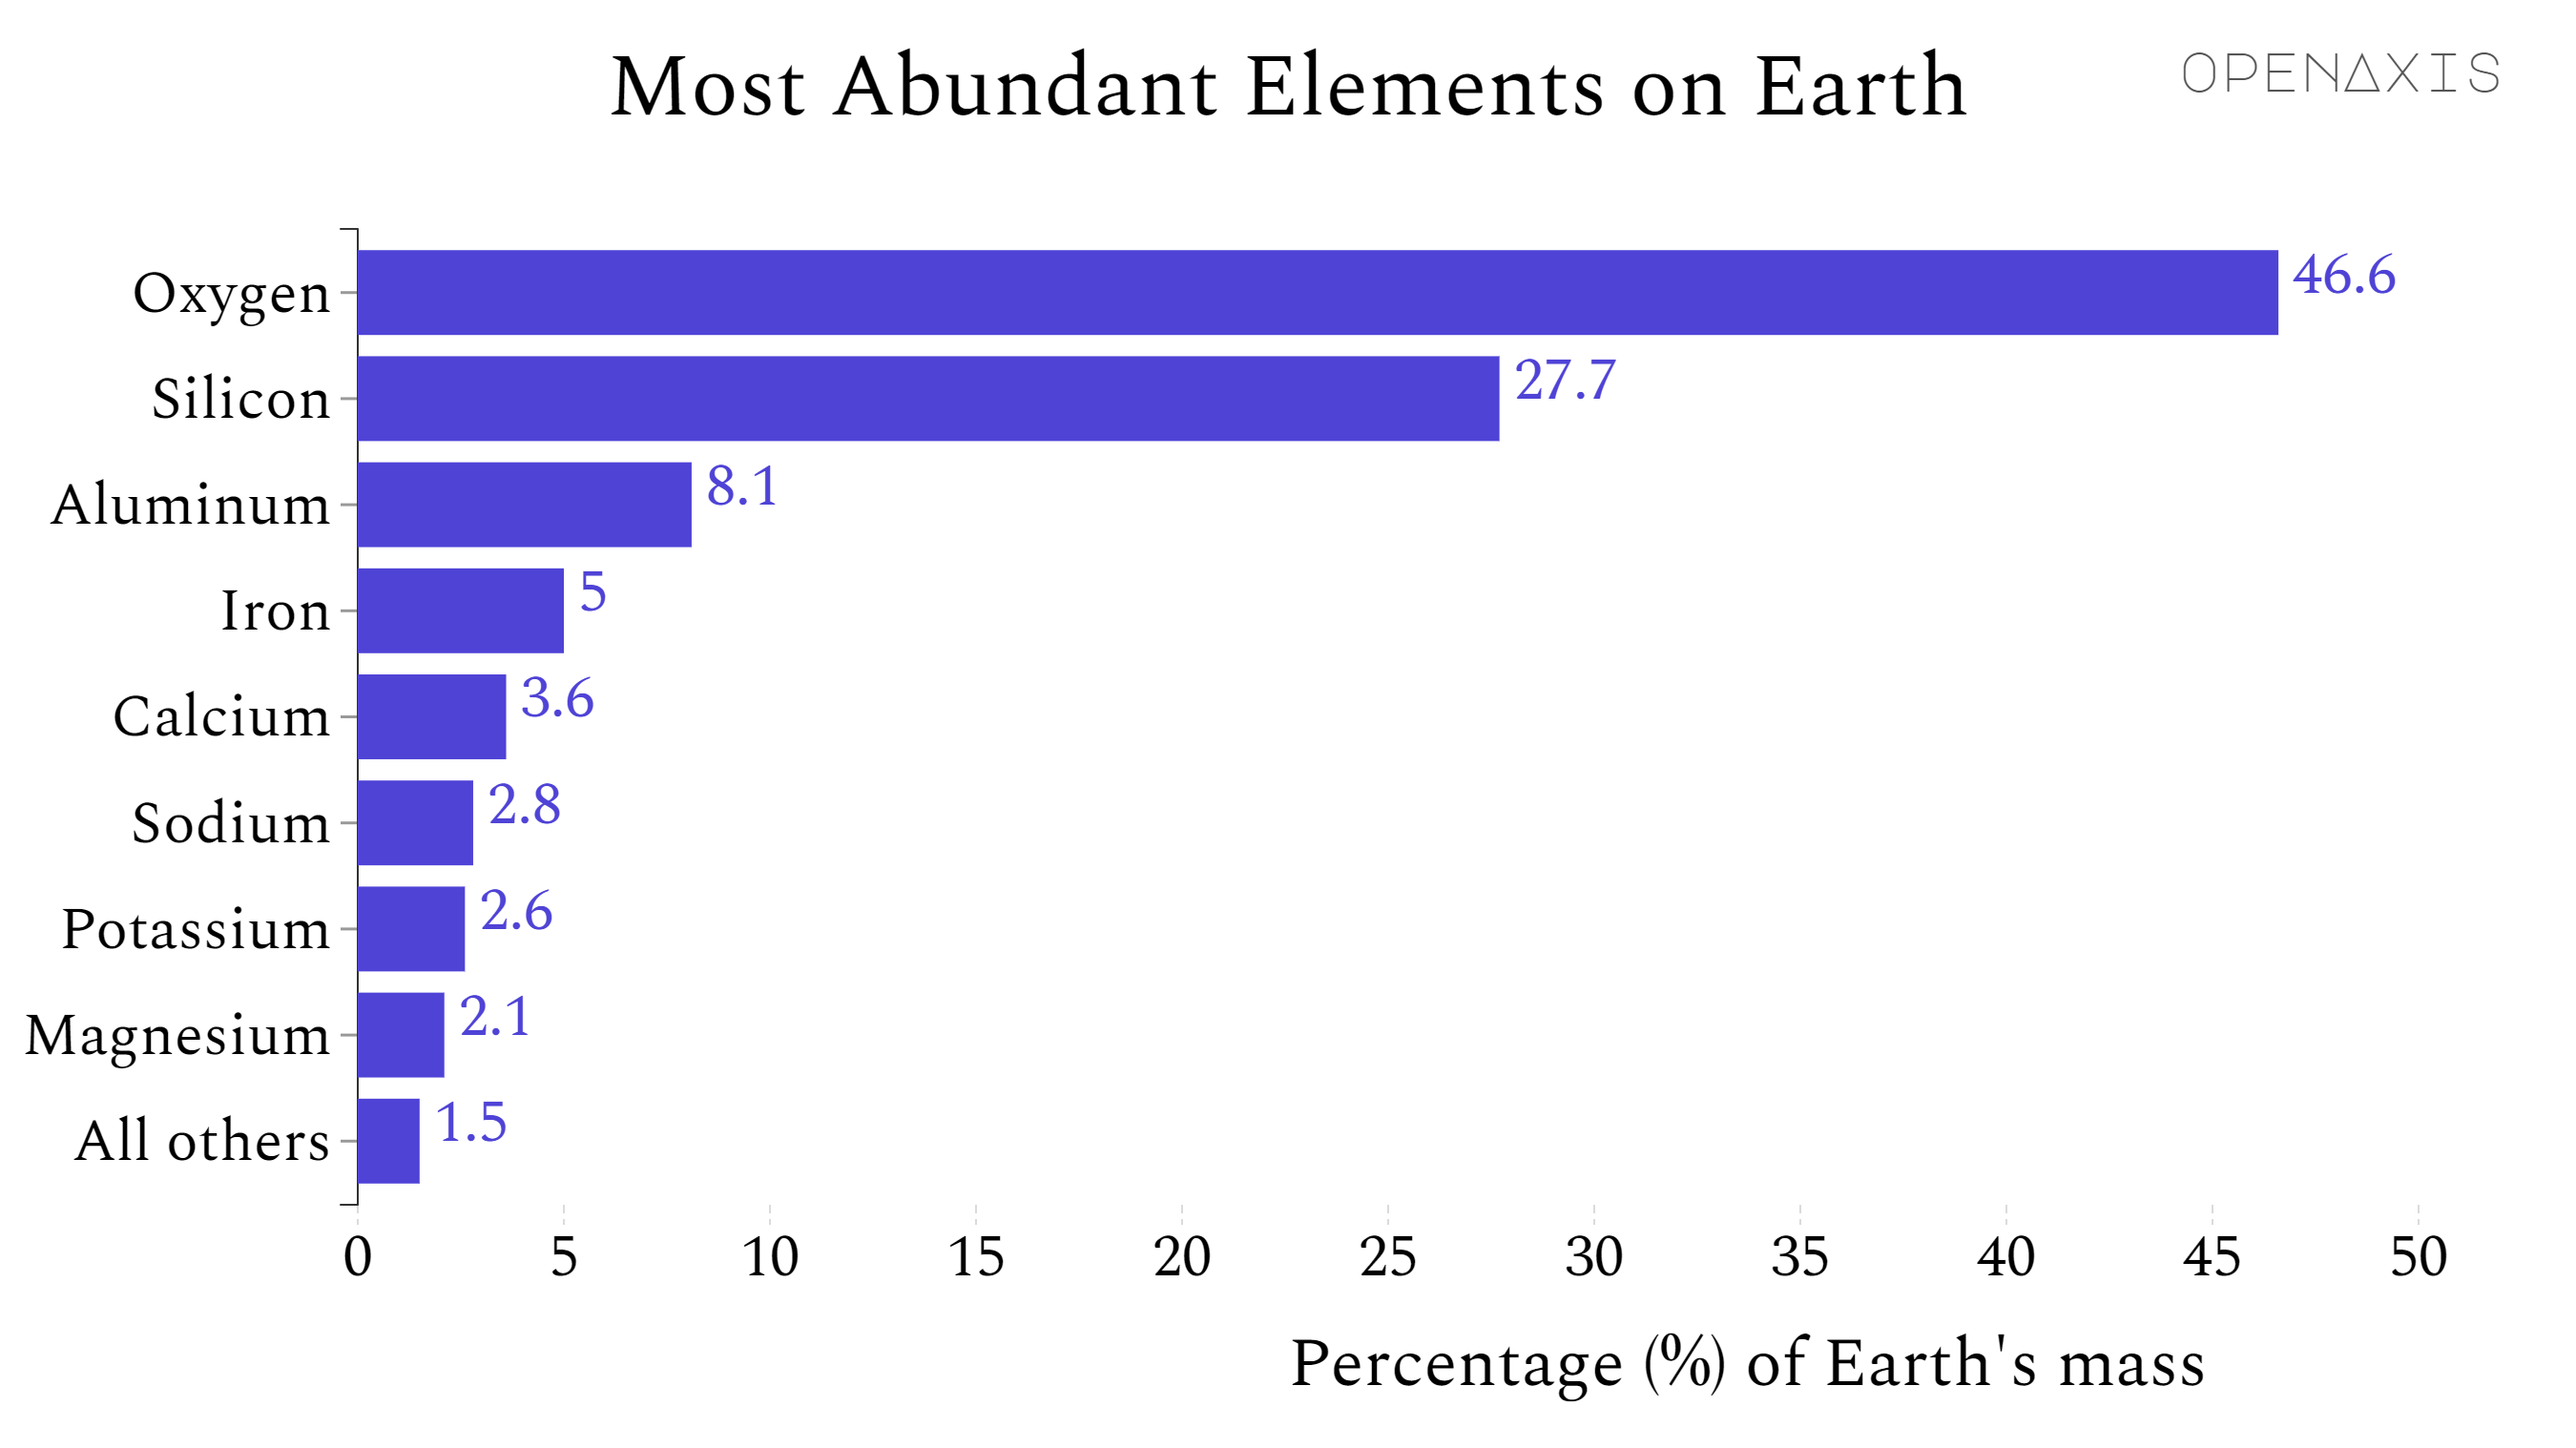 "Most Abundant Elements on Earth"